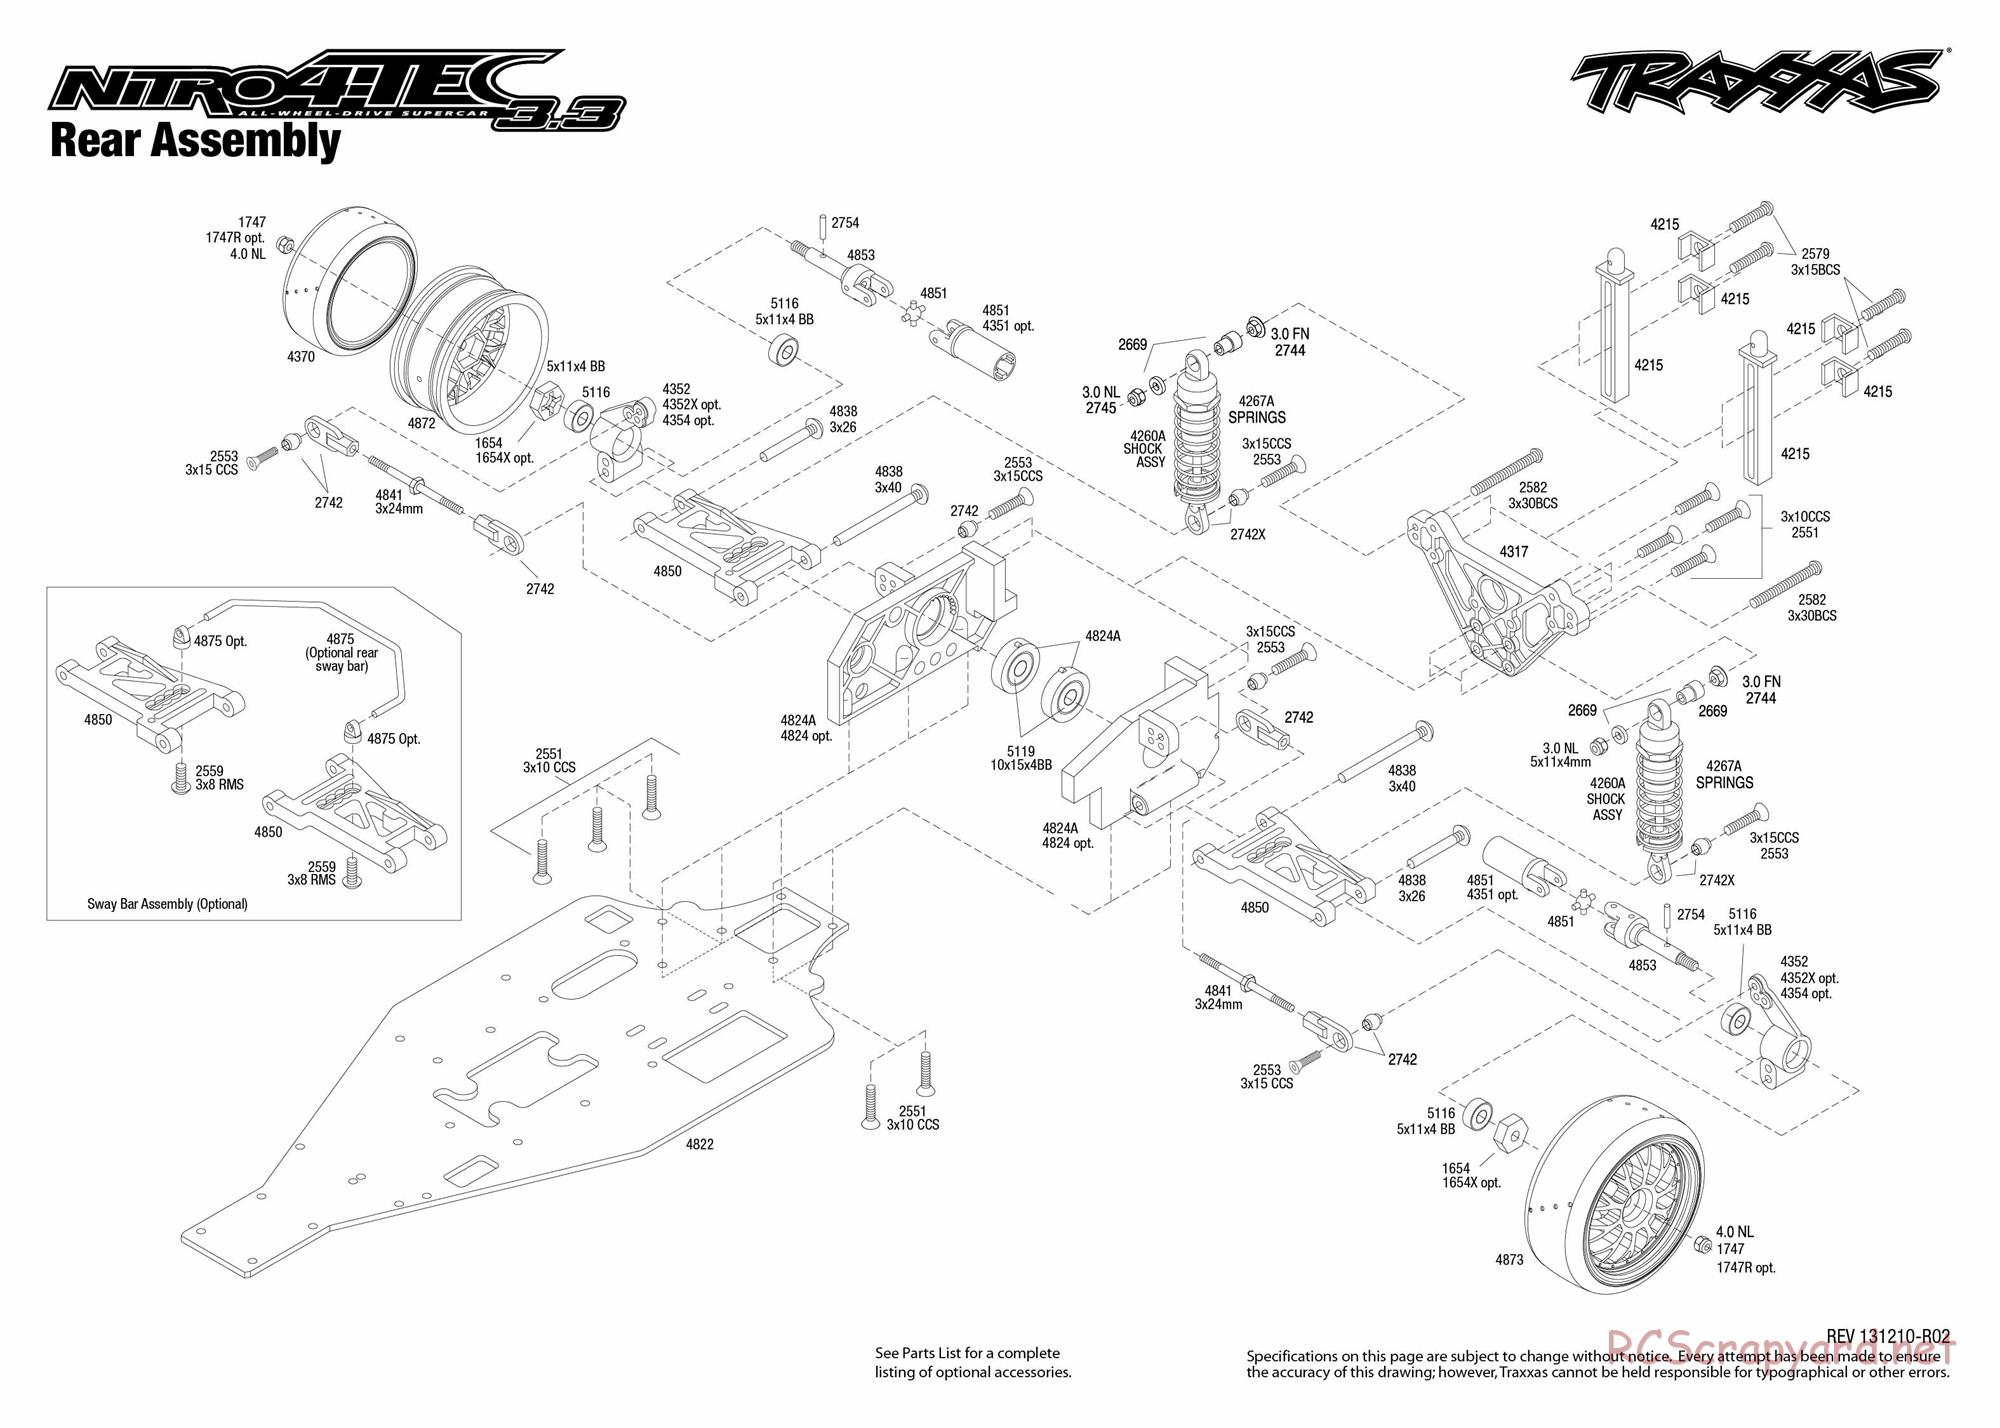 Traxxas - Nitro 4-Tec 3.3 (2010) - Exploded Views - Page 3